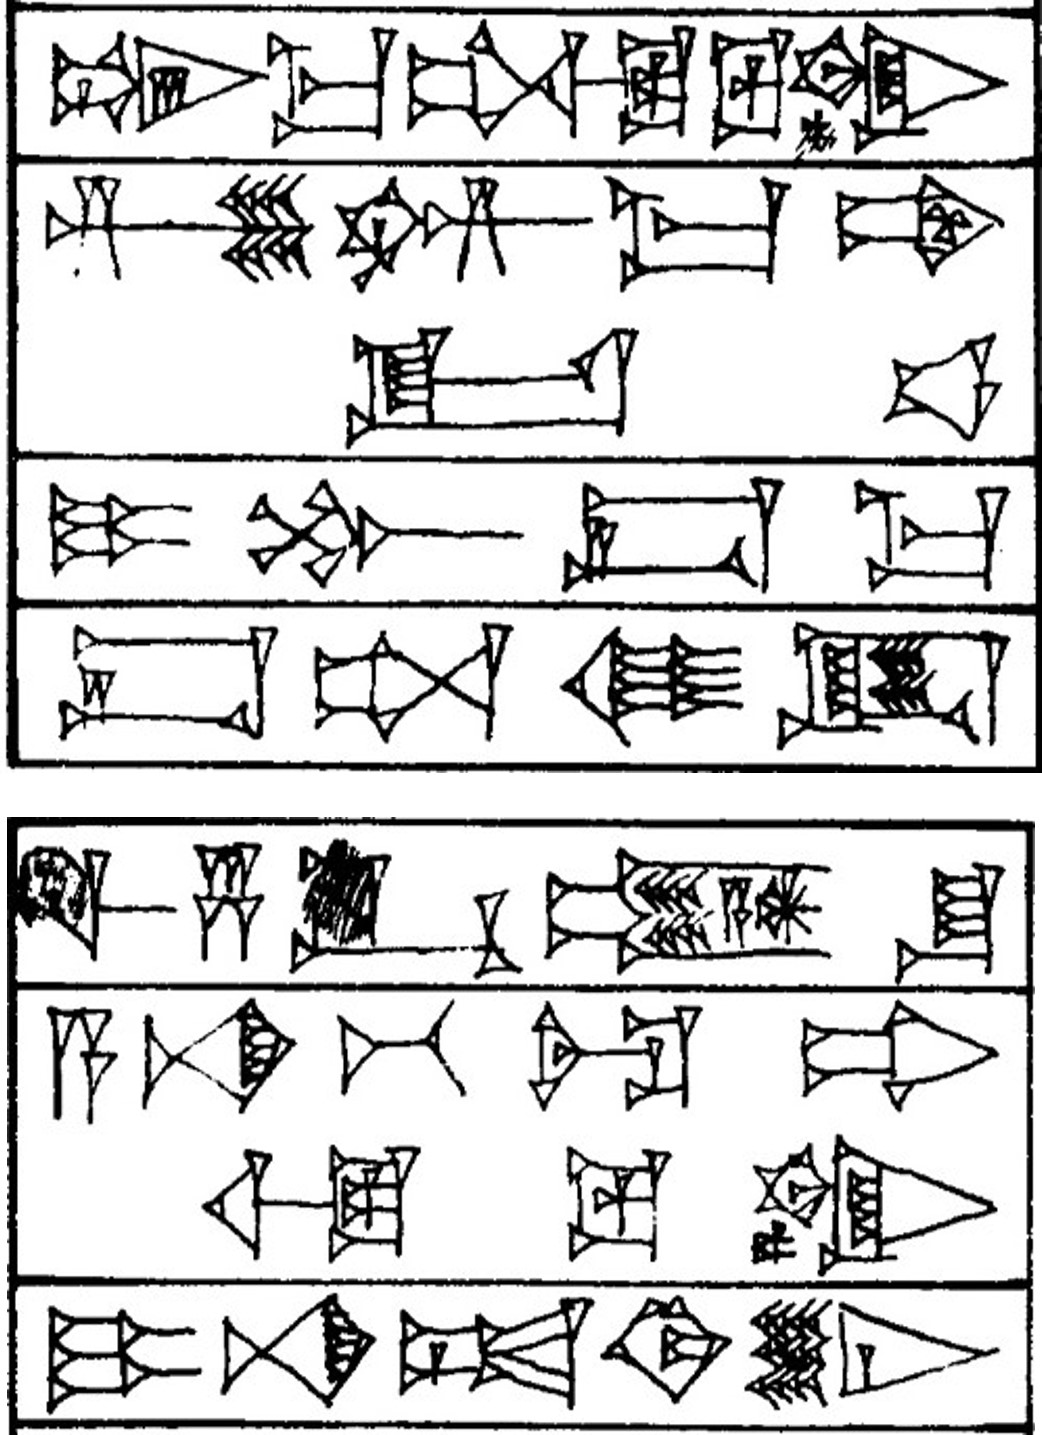 Law § 225 - Cuneiform - Law Code of Hammurabi